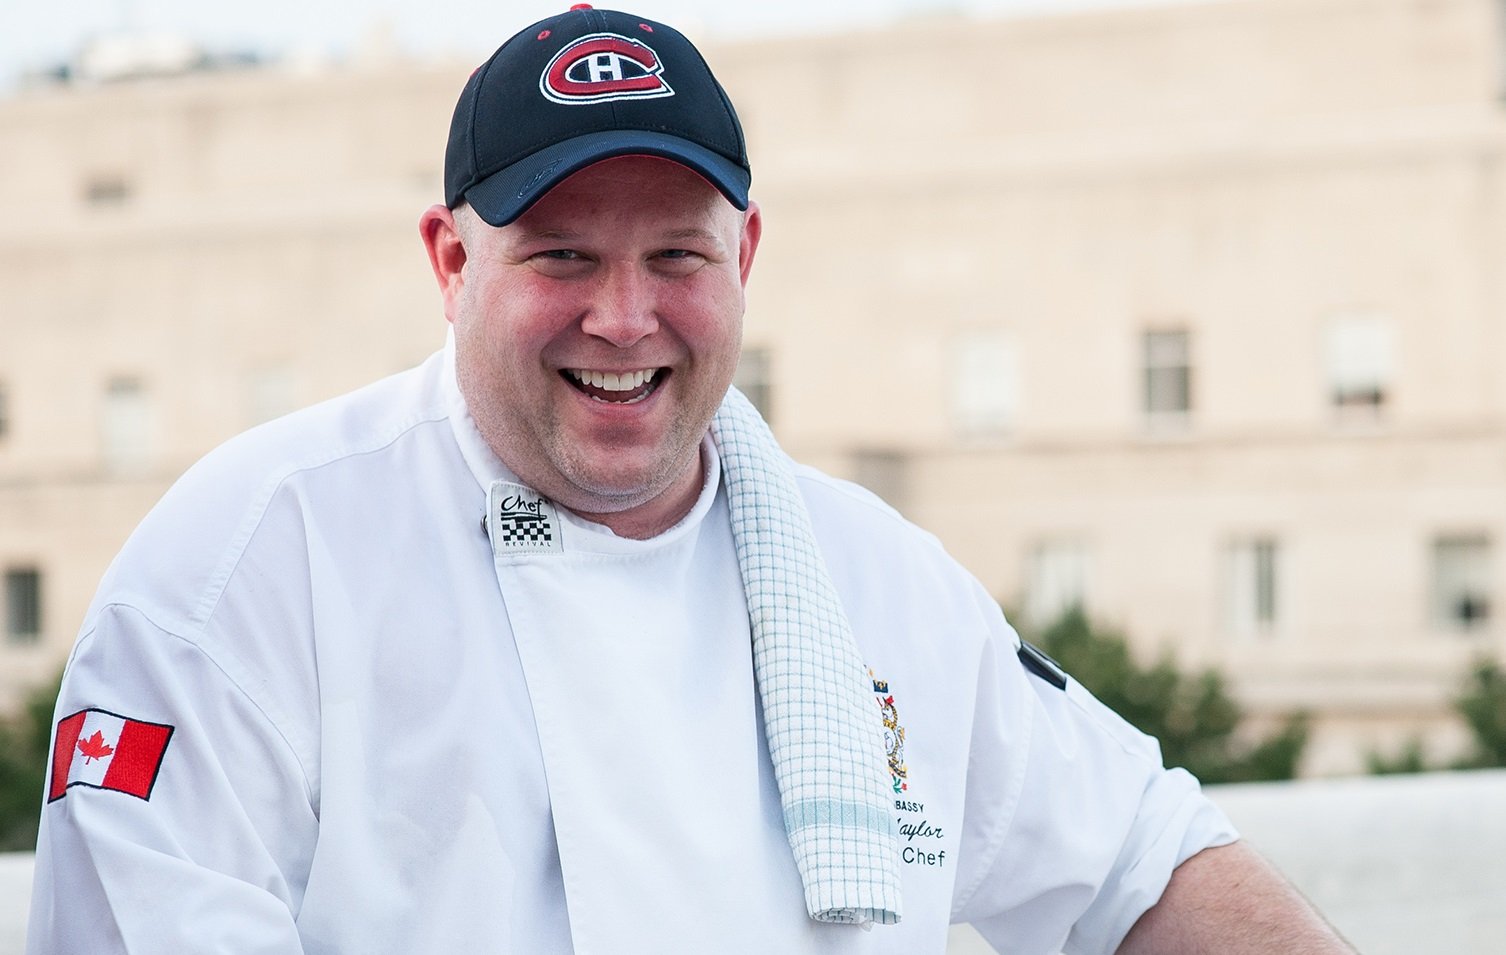 Meet Executive Chef and Ottawa Alumni, Thomas Naylor